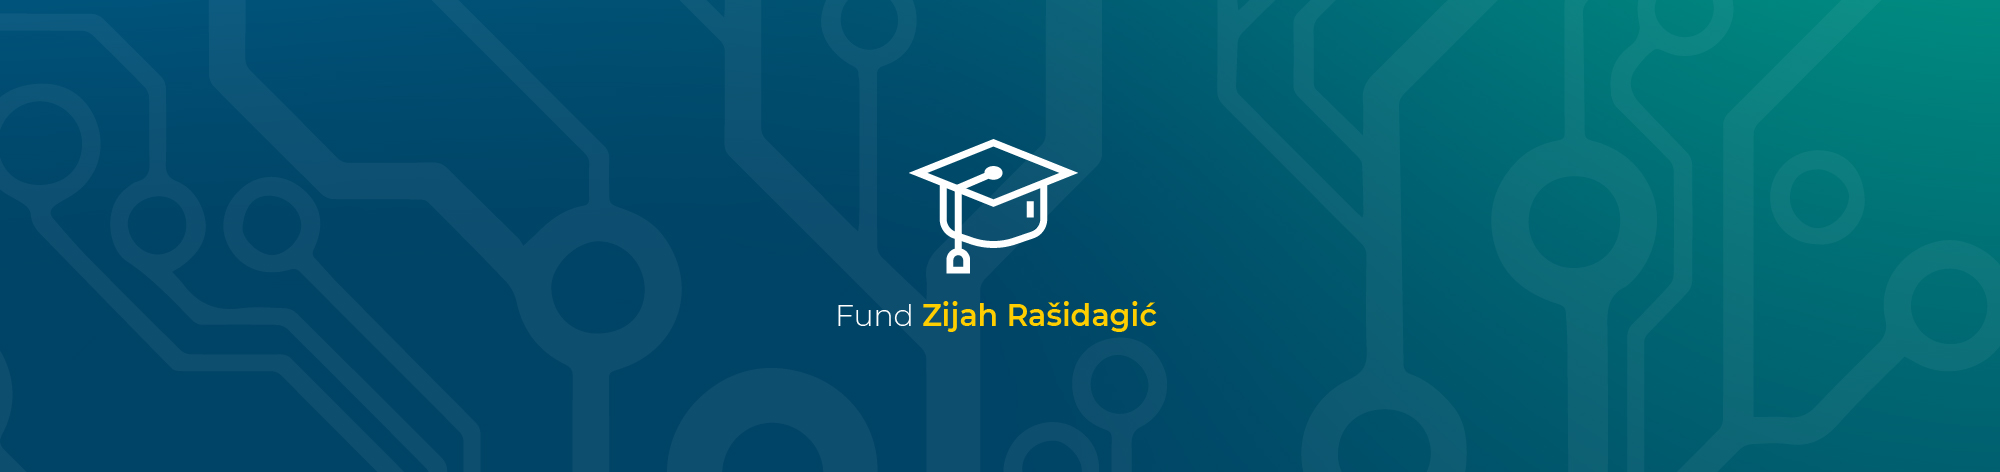 Fund Zijah Rasidagic - cover2